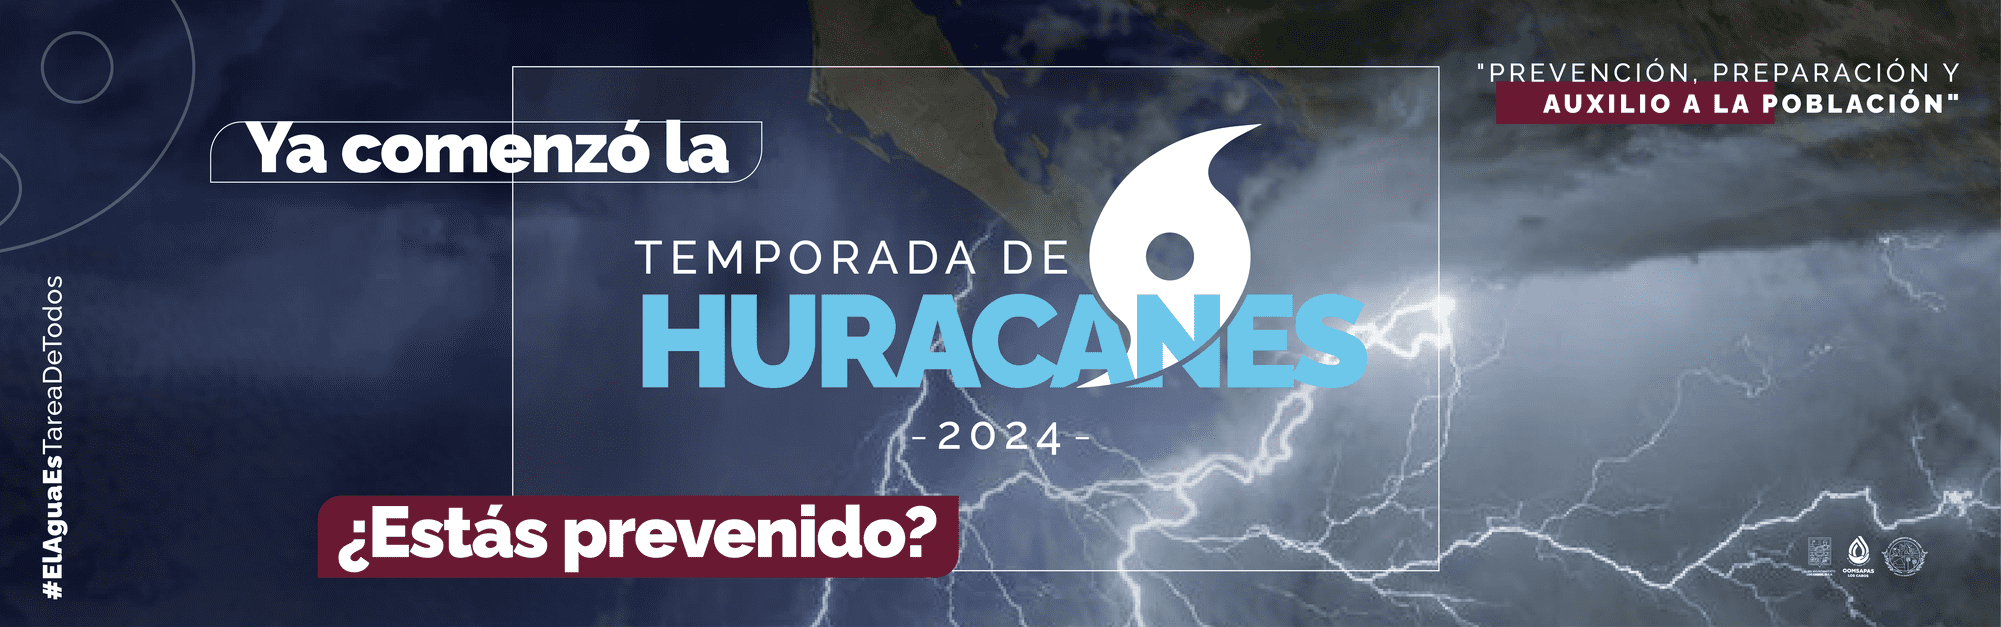 huracanes24-1